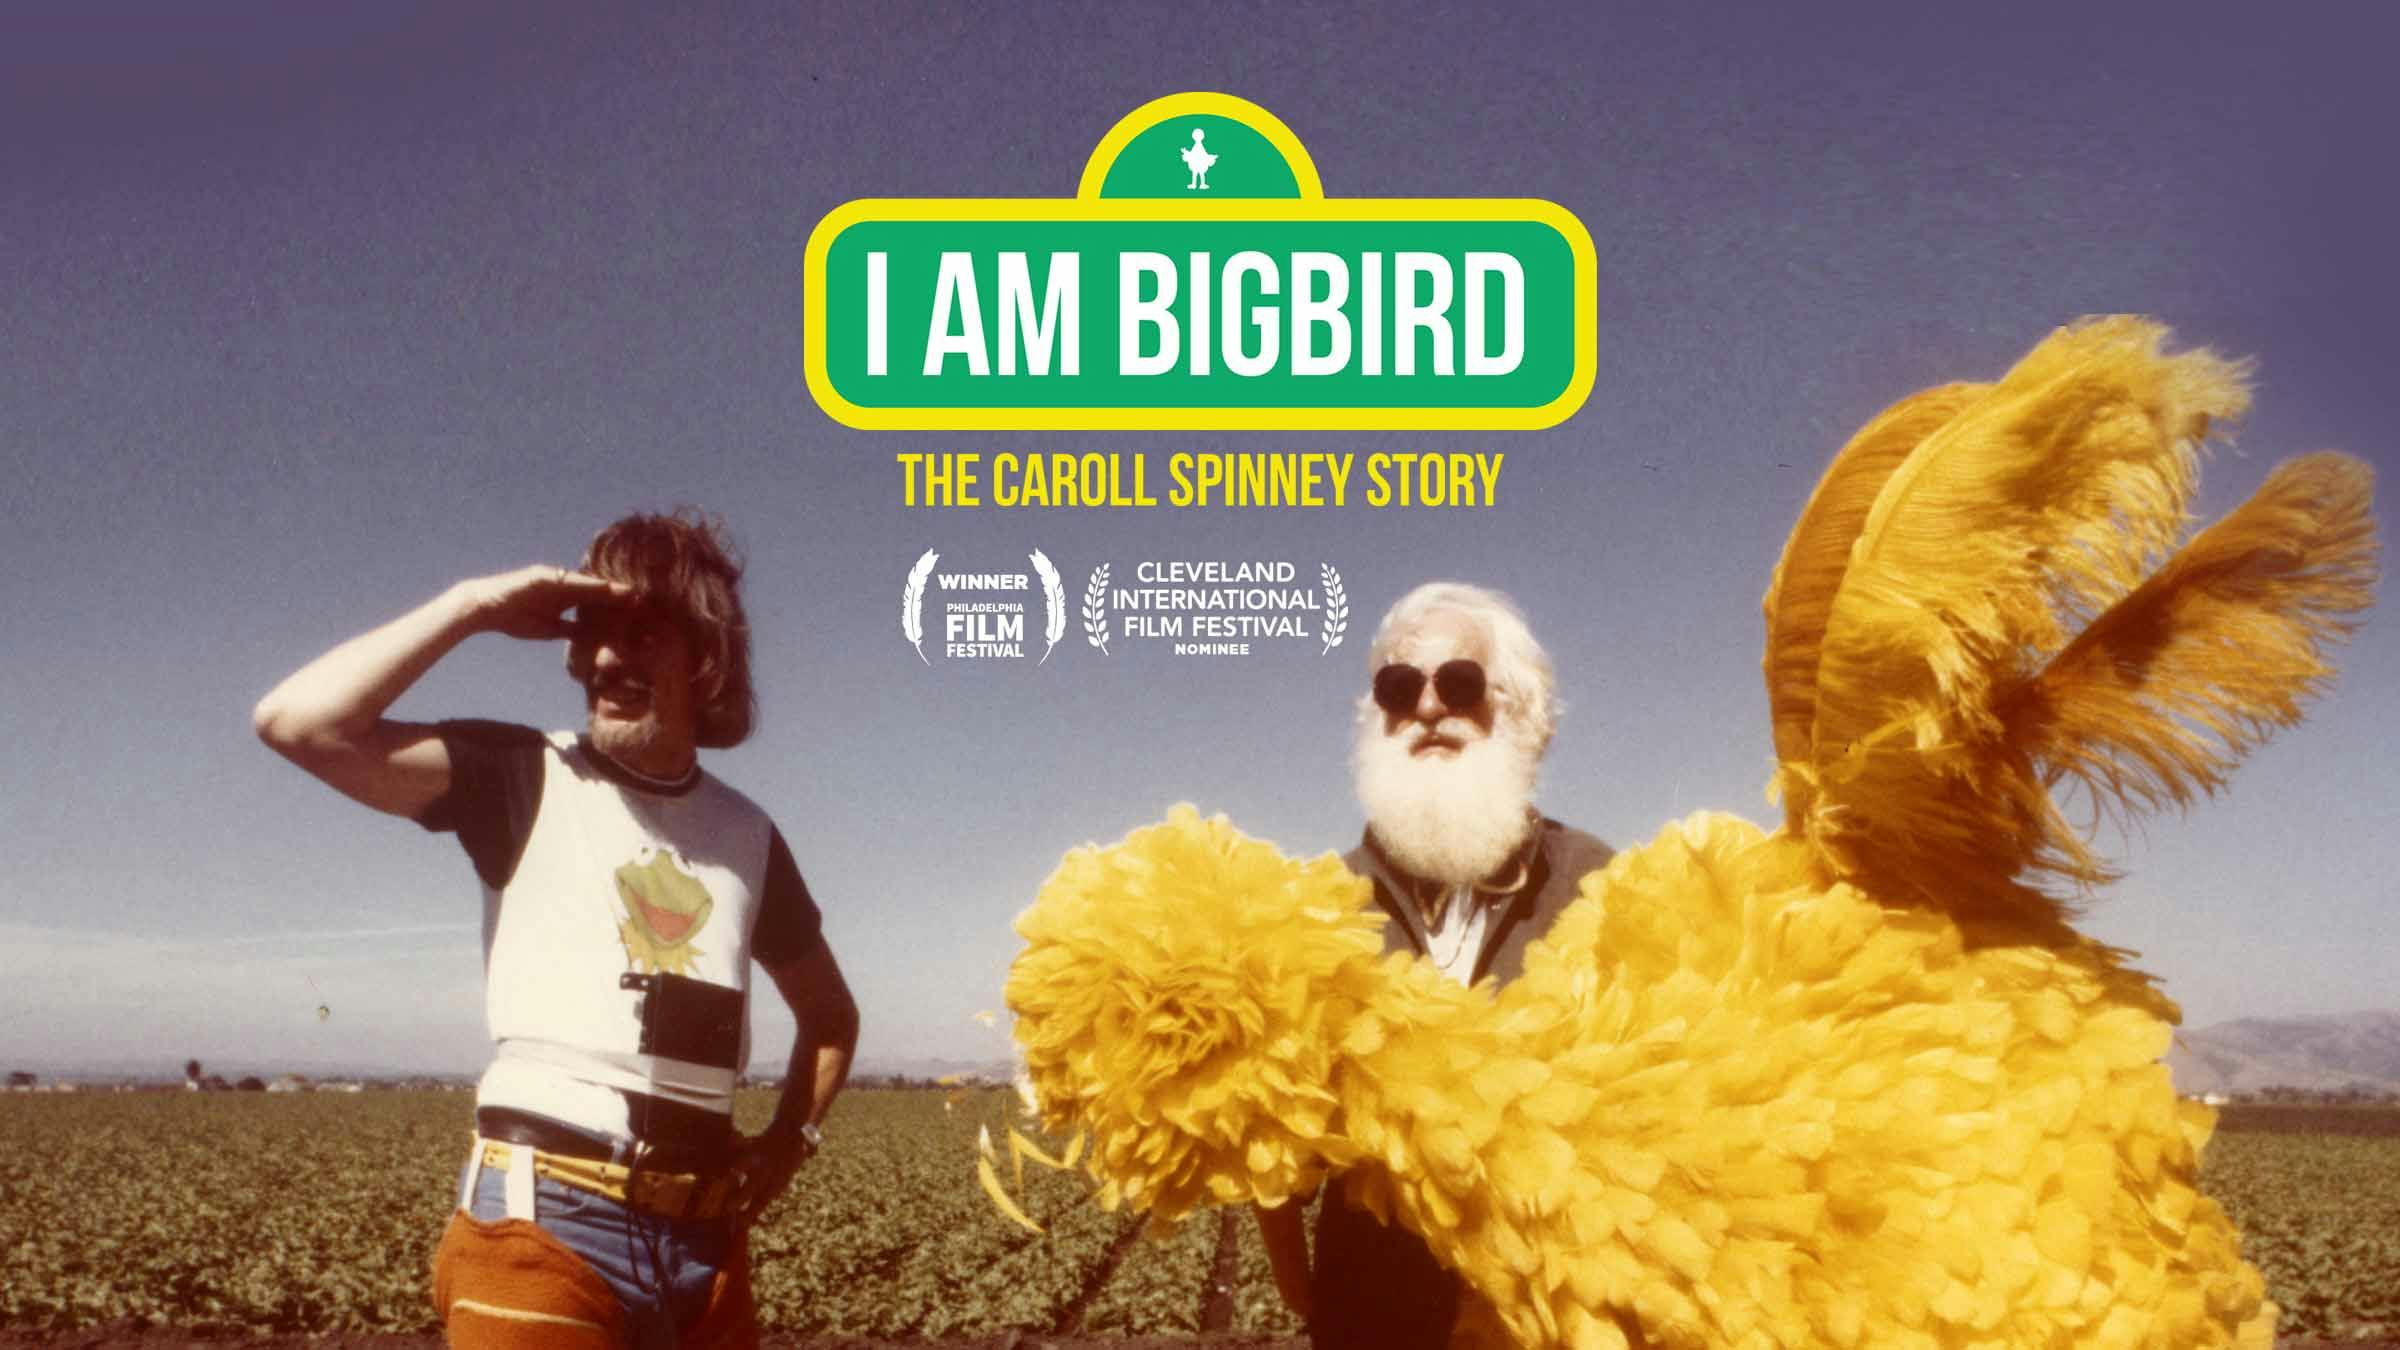 I Am Big Bird: The Caroll Spinney Story